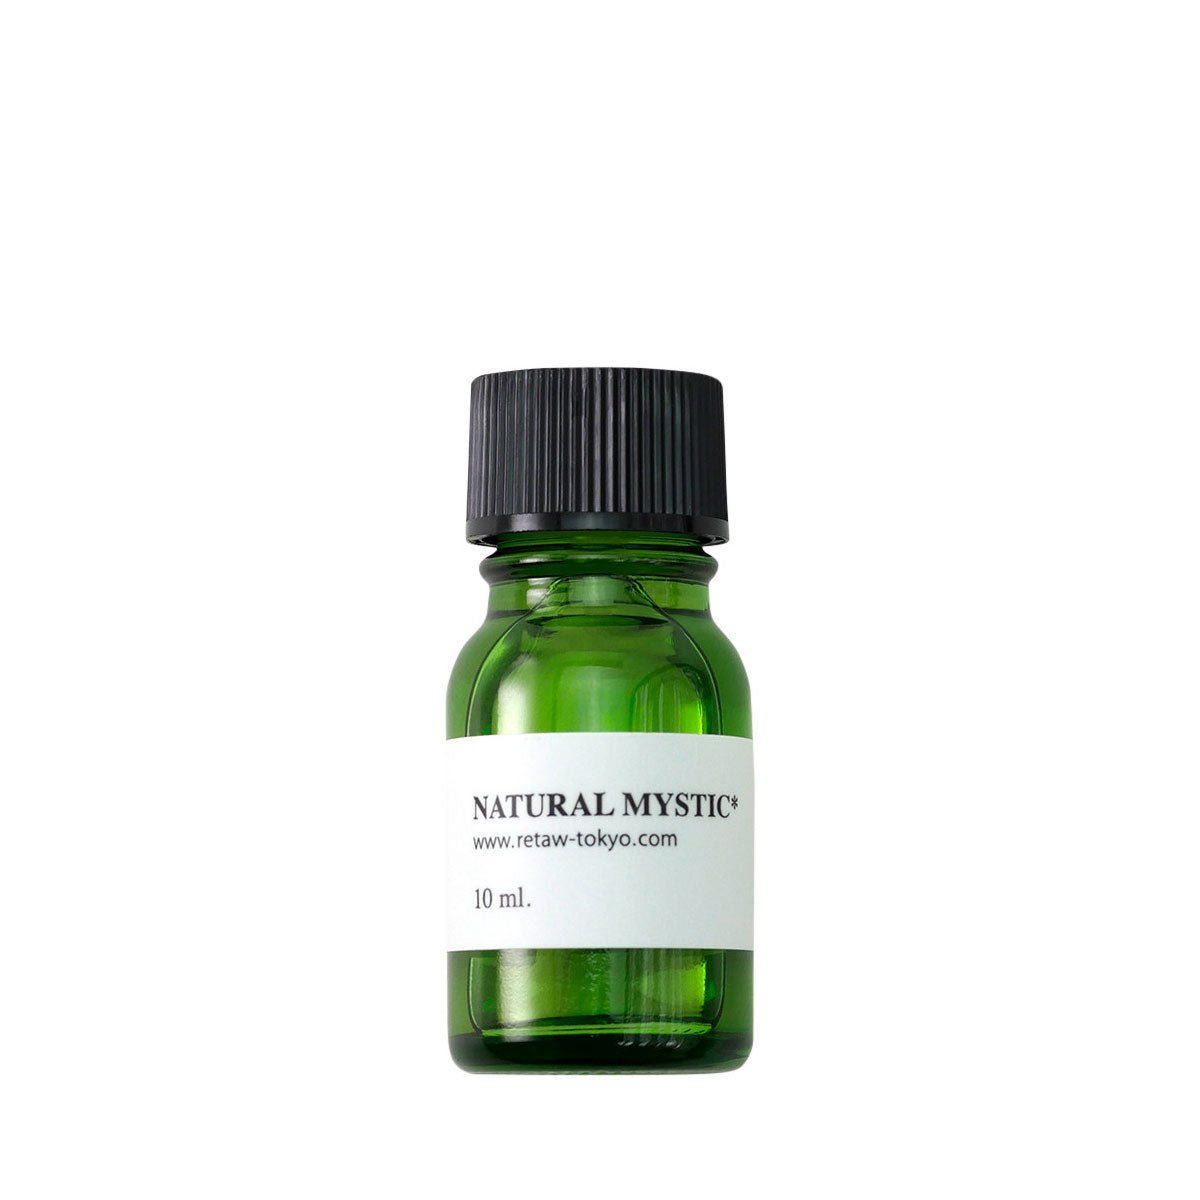 retaW Fragrance Room Oil 'Natural Mystic' 10ml  - Allike Store